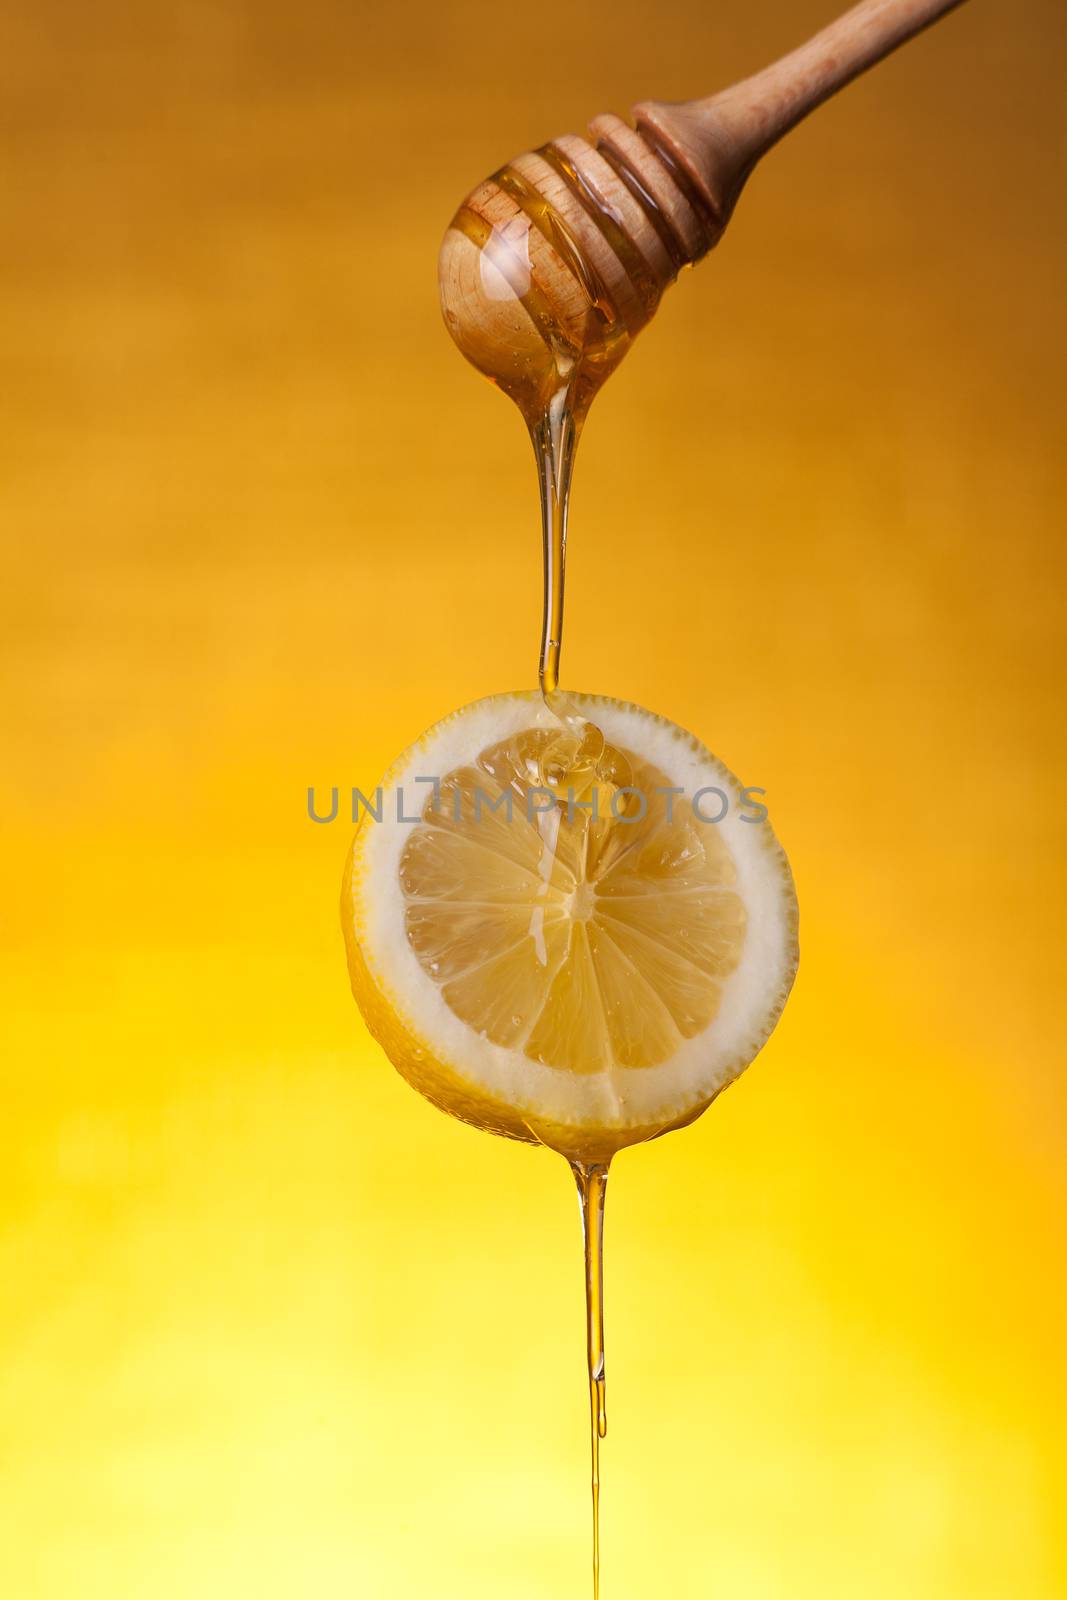 Honey flowing on lemon slice, studio shot over yellow background 